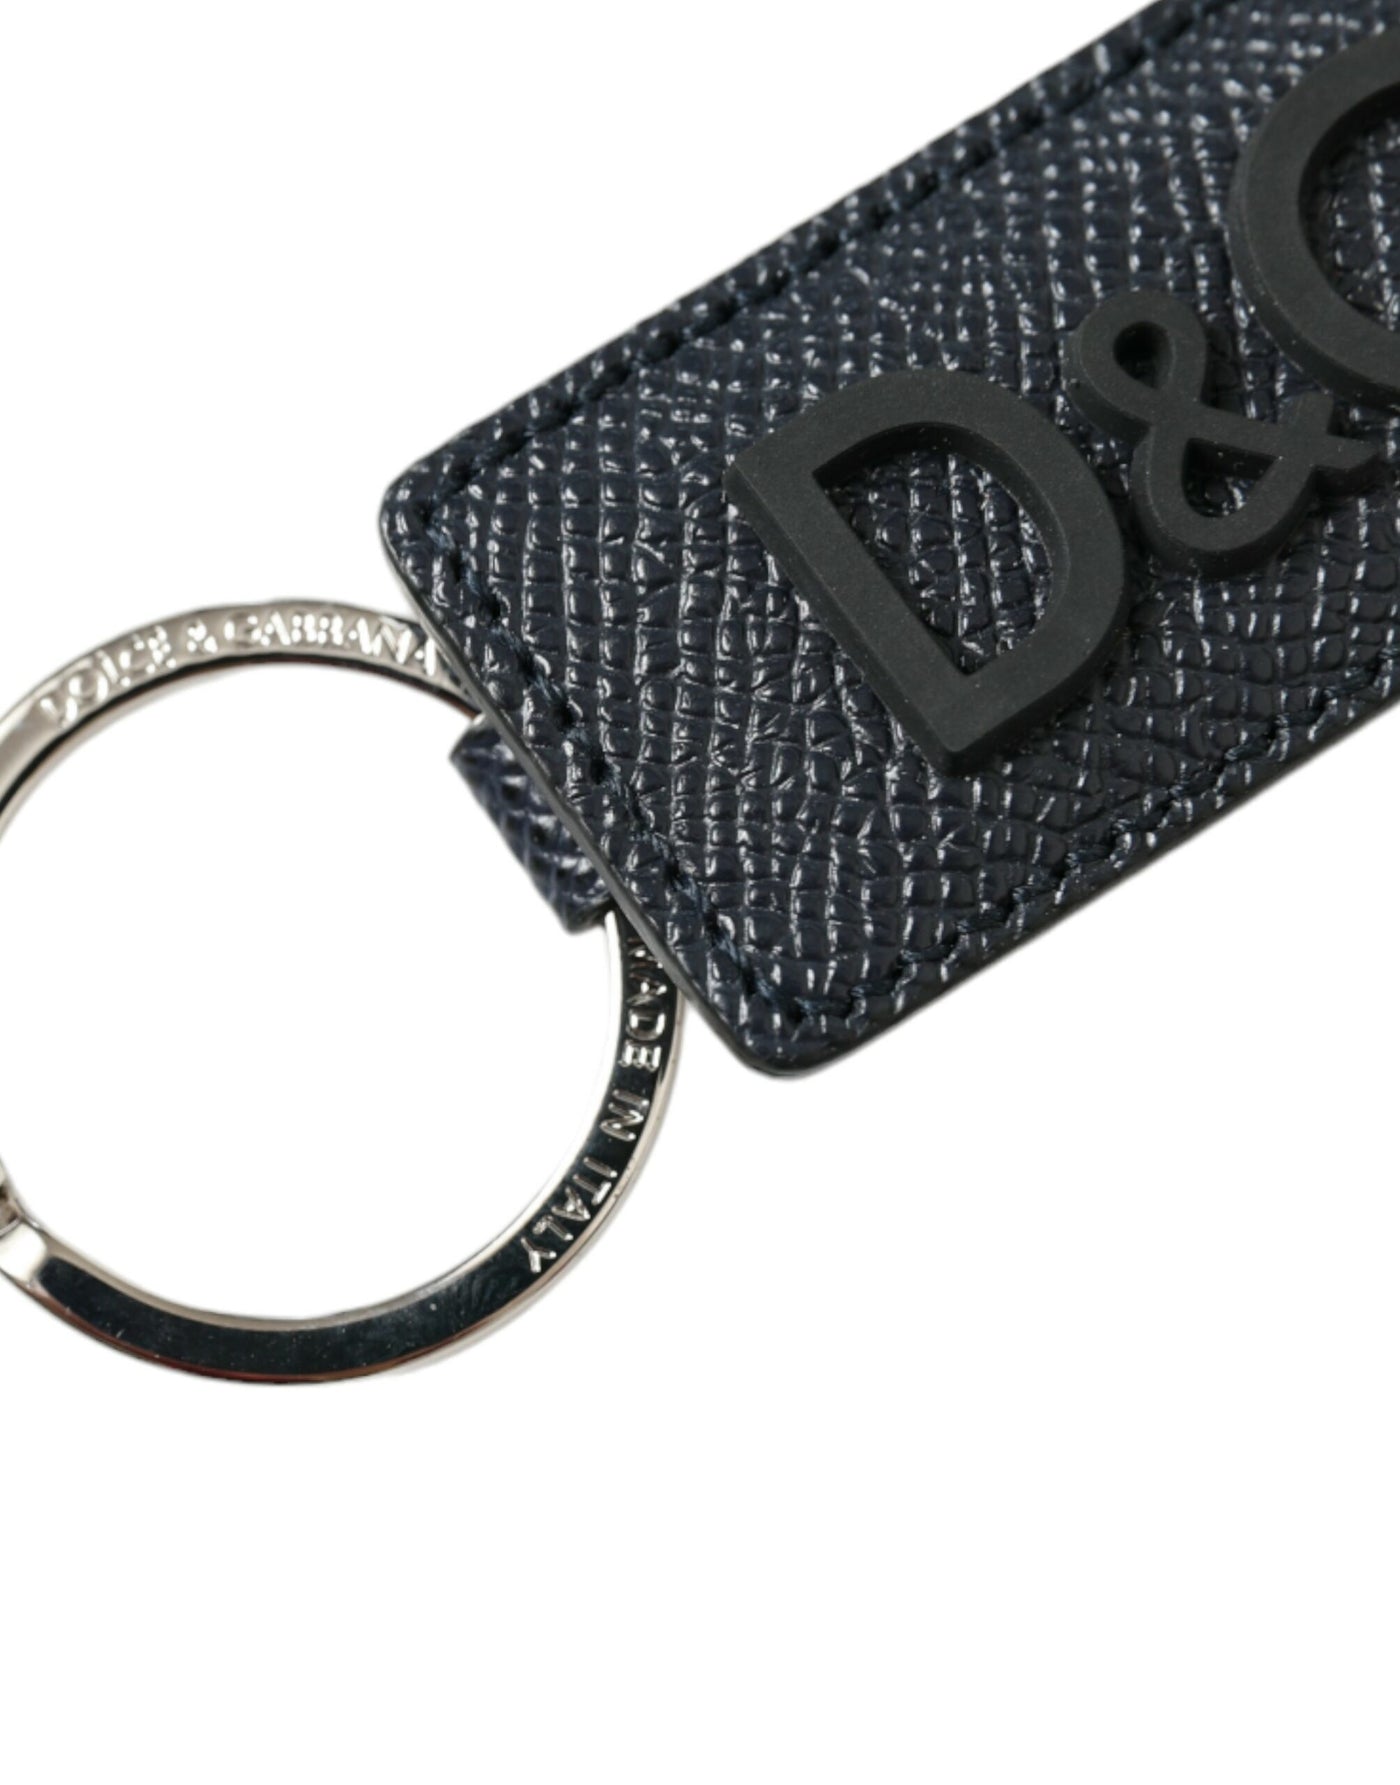 Dolce & Gabbana Black Calf Leather DG Logo Silver Brass Keyring Keychain